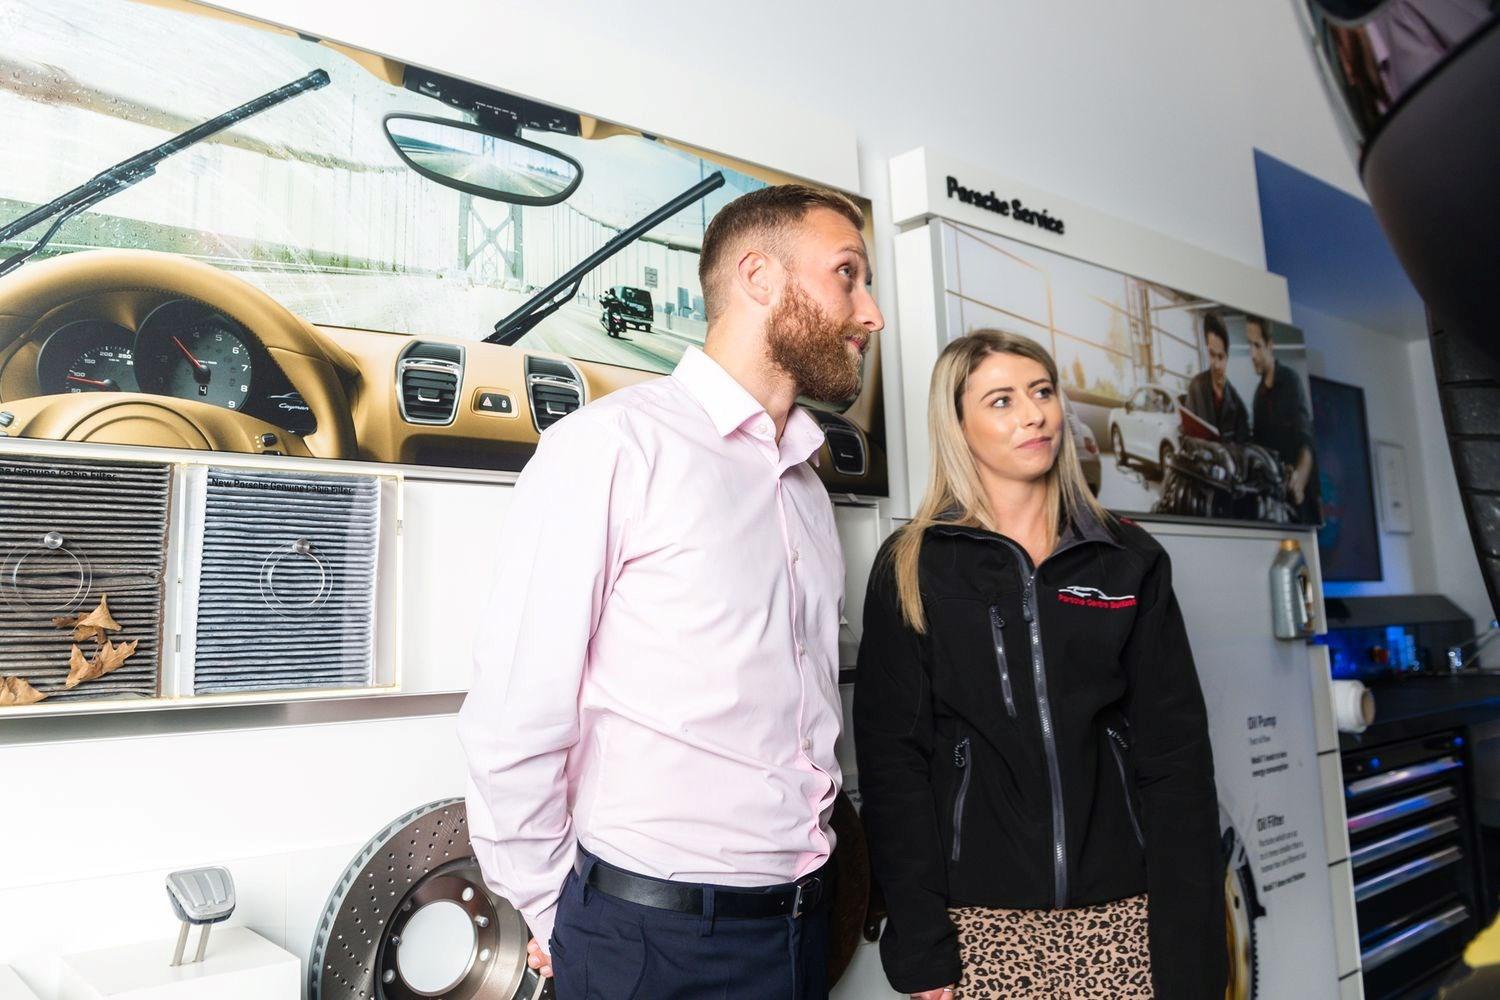 Porsche Service Specialist discusses service plan options with customer at Porsche Centre Belfast showroom.